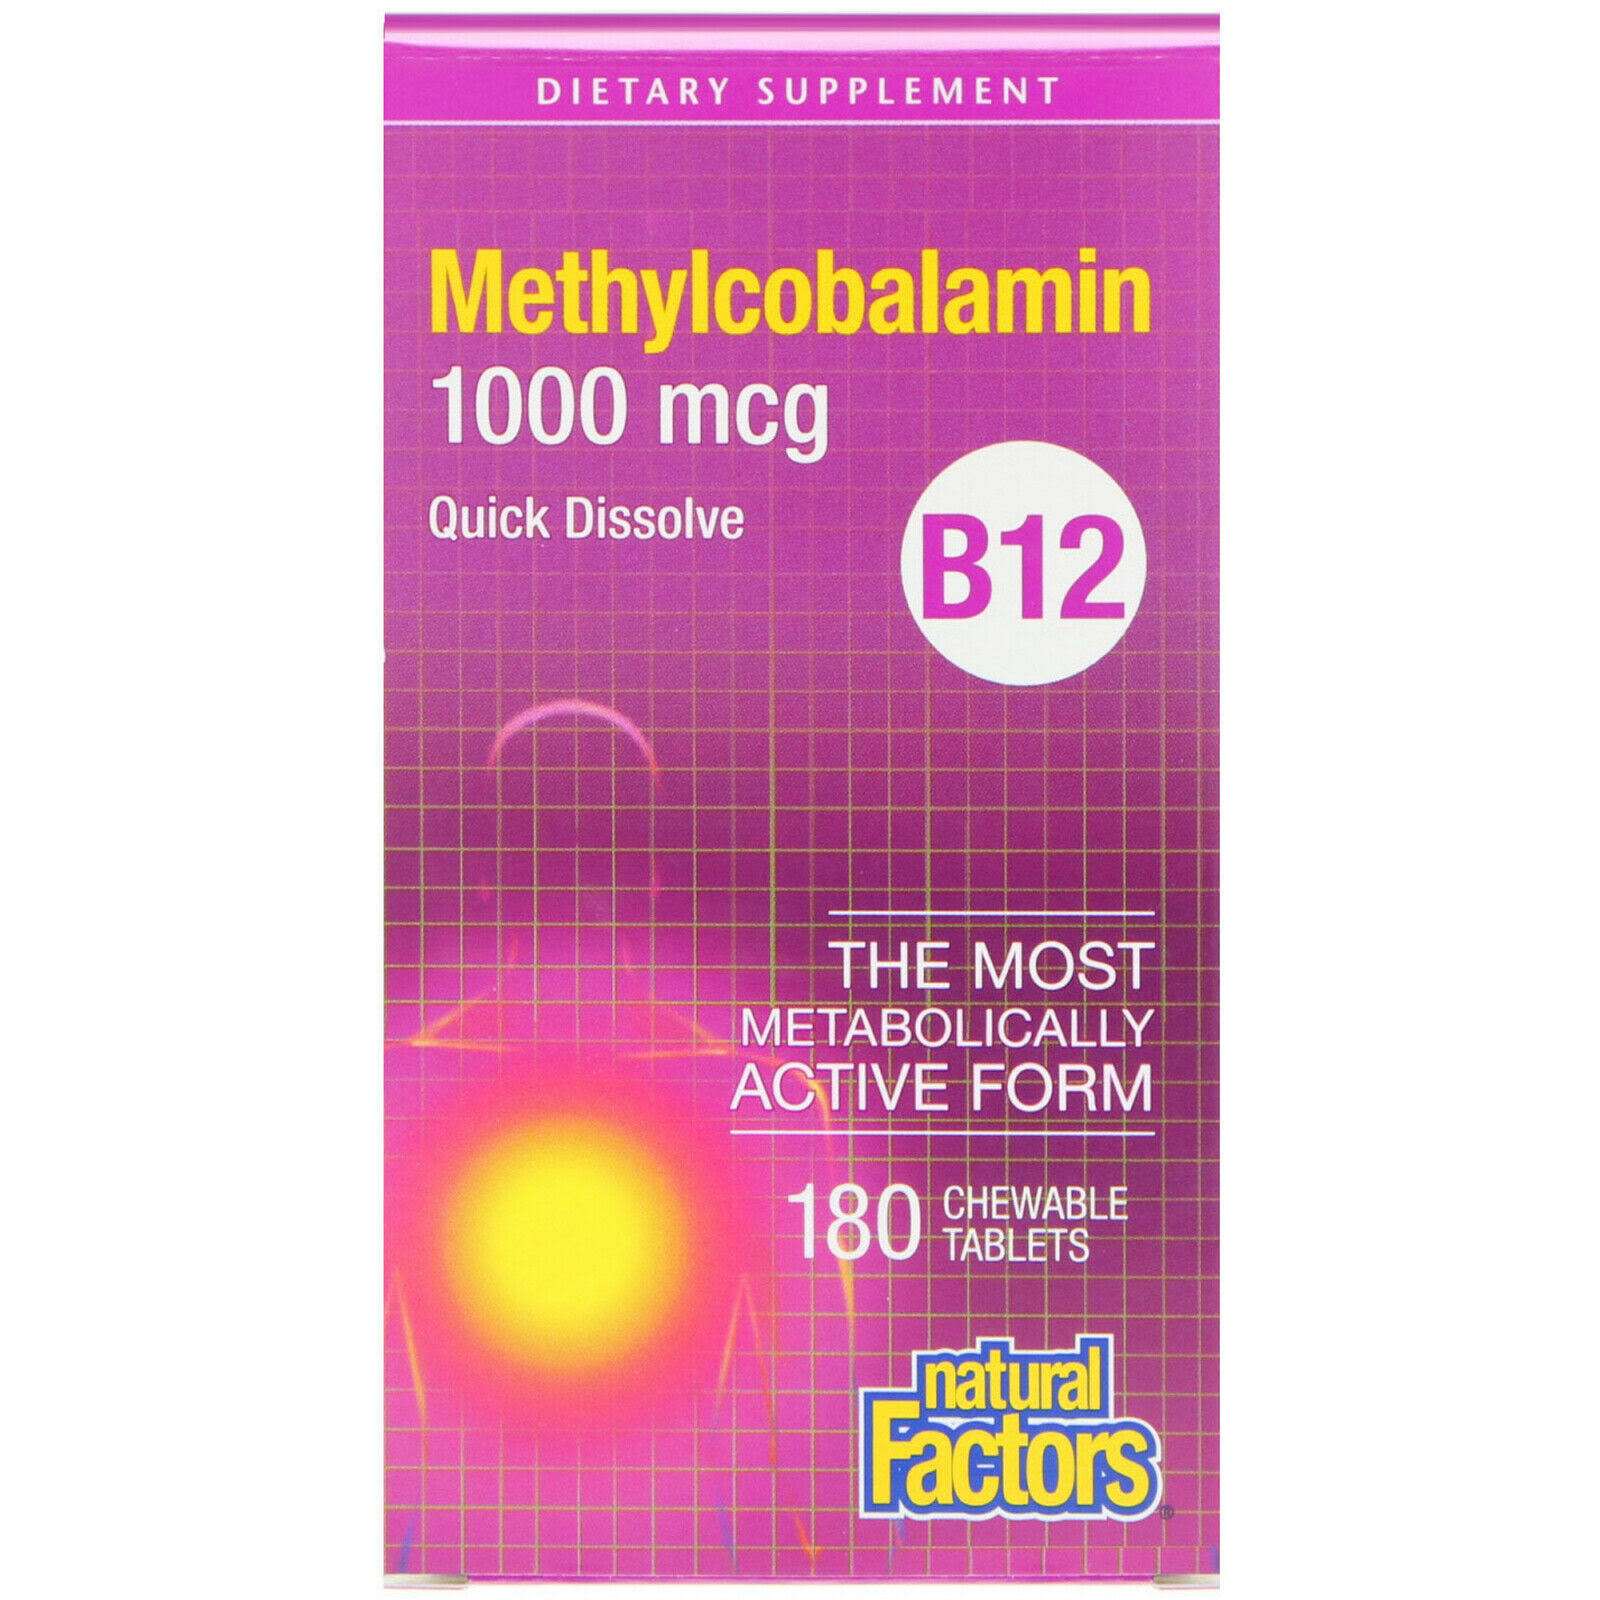 Natural Factors B12 Methylcobalamin Supplement - 180 Chewable Tablets